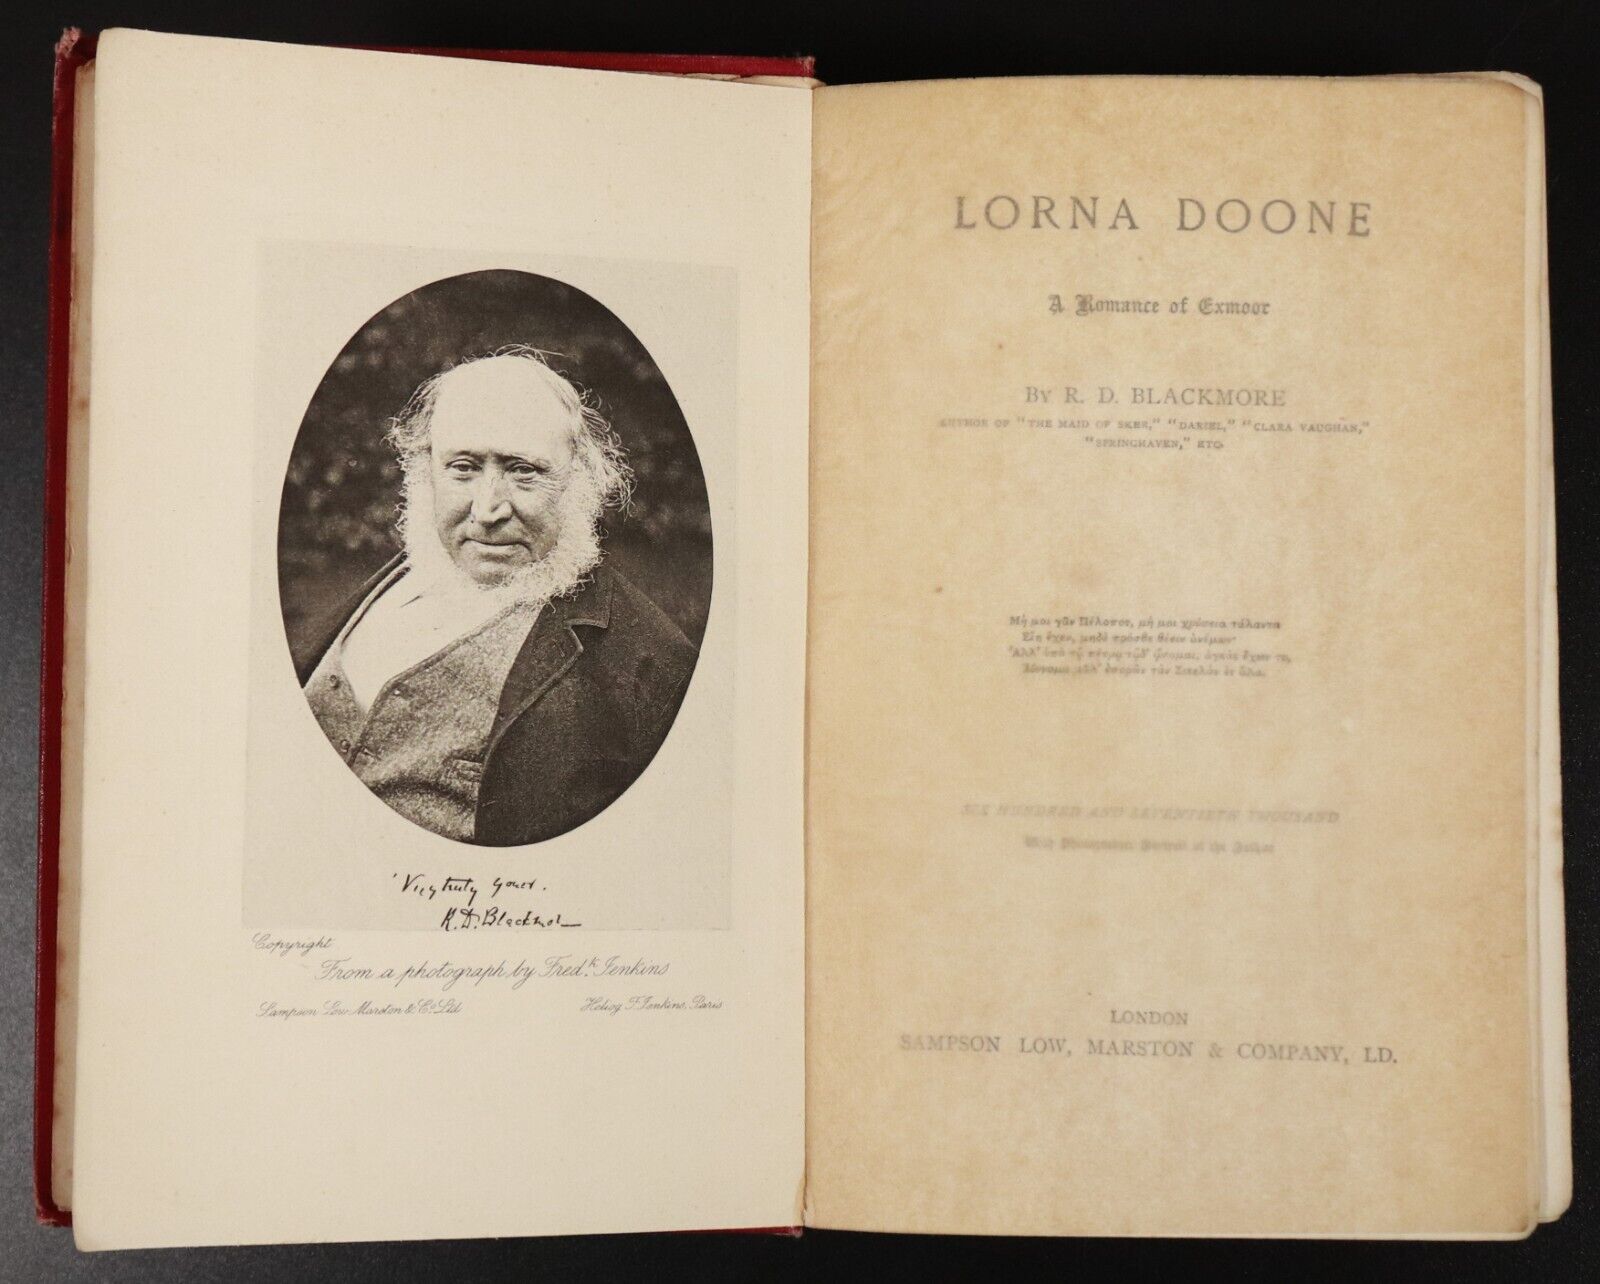 c1885 Lorna Doone by R.D. Blackmore Antique Classic Literature Fiction Book - 0